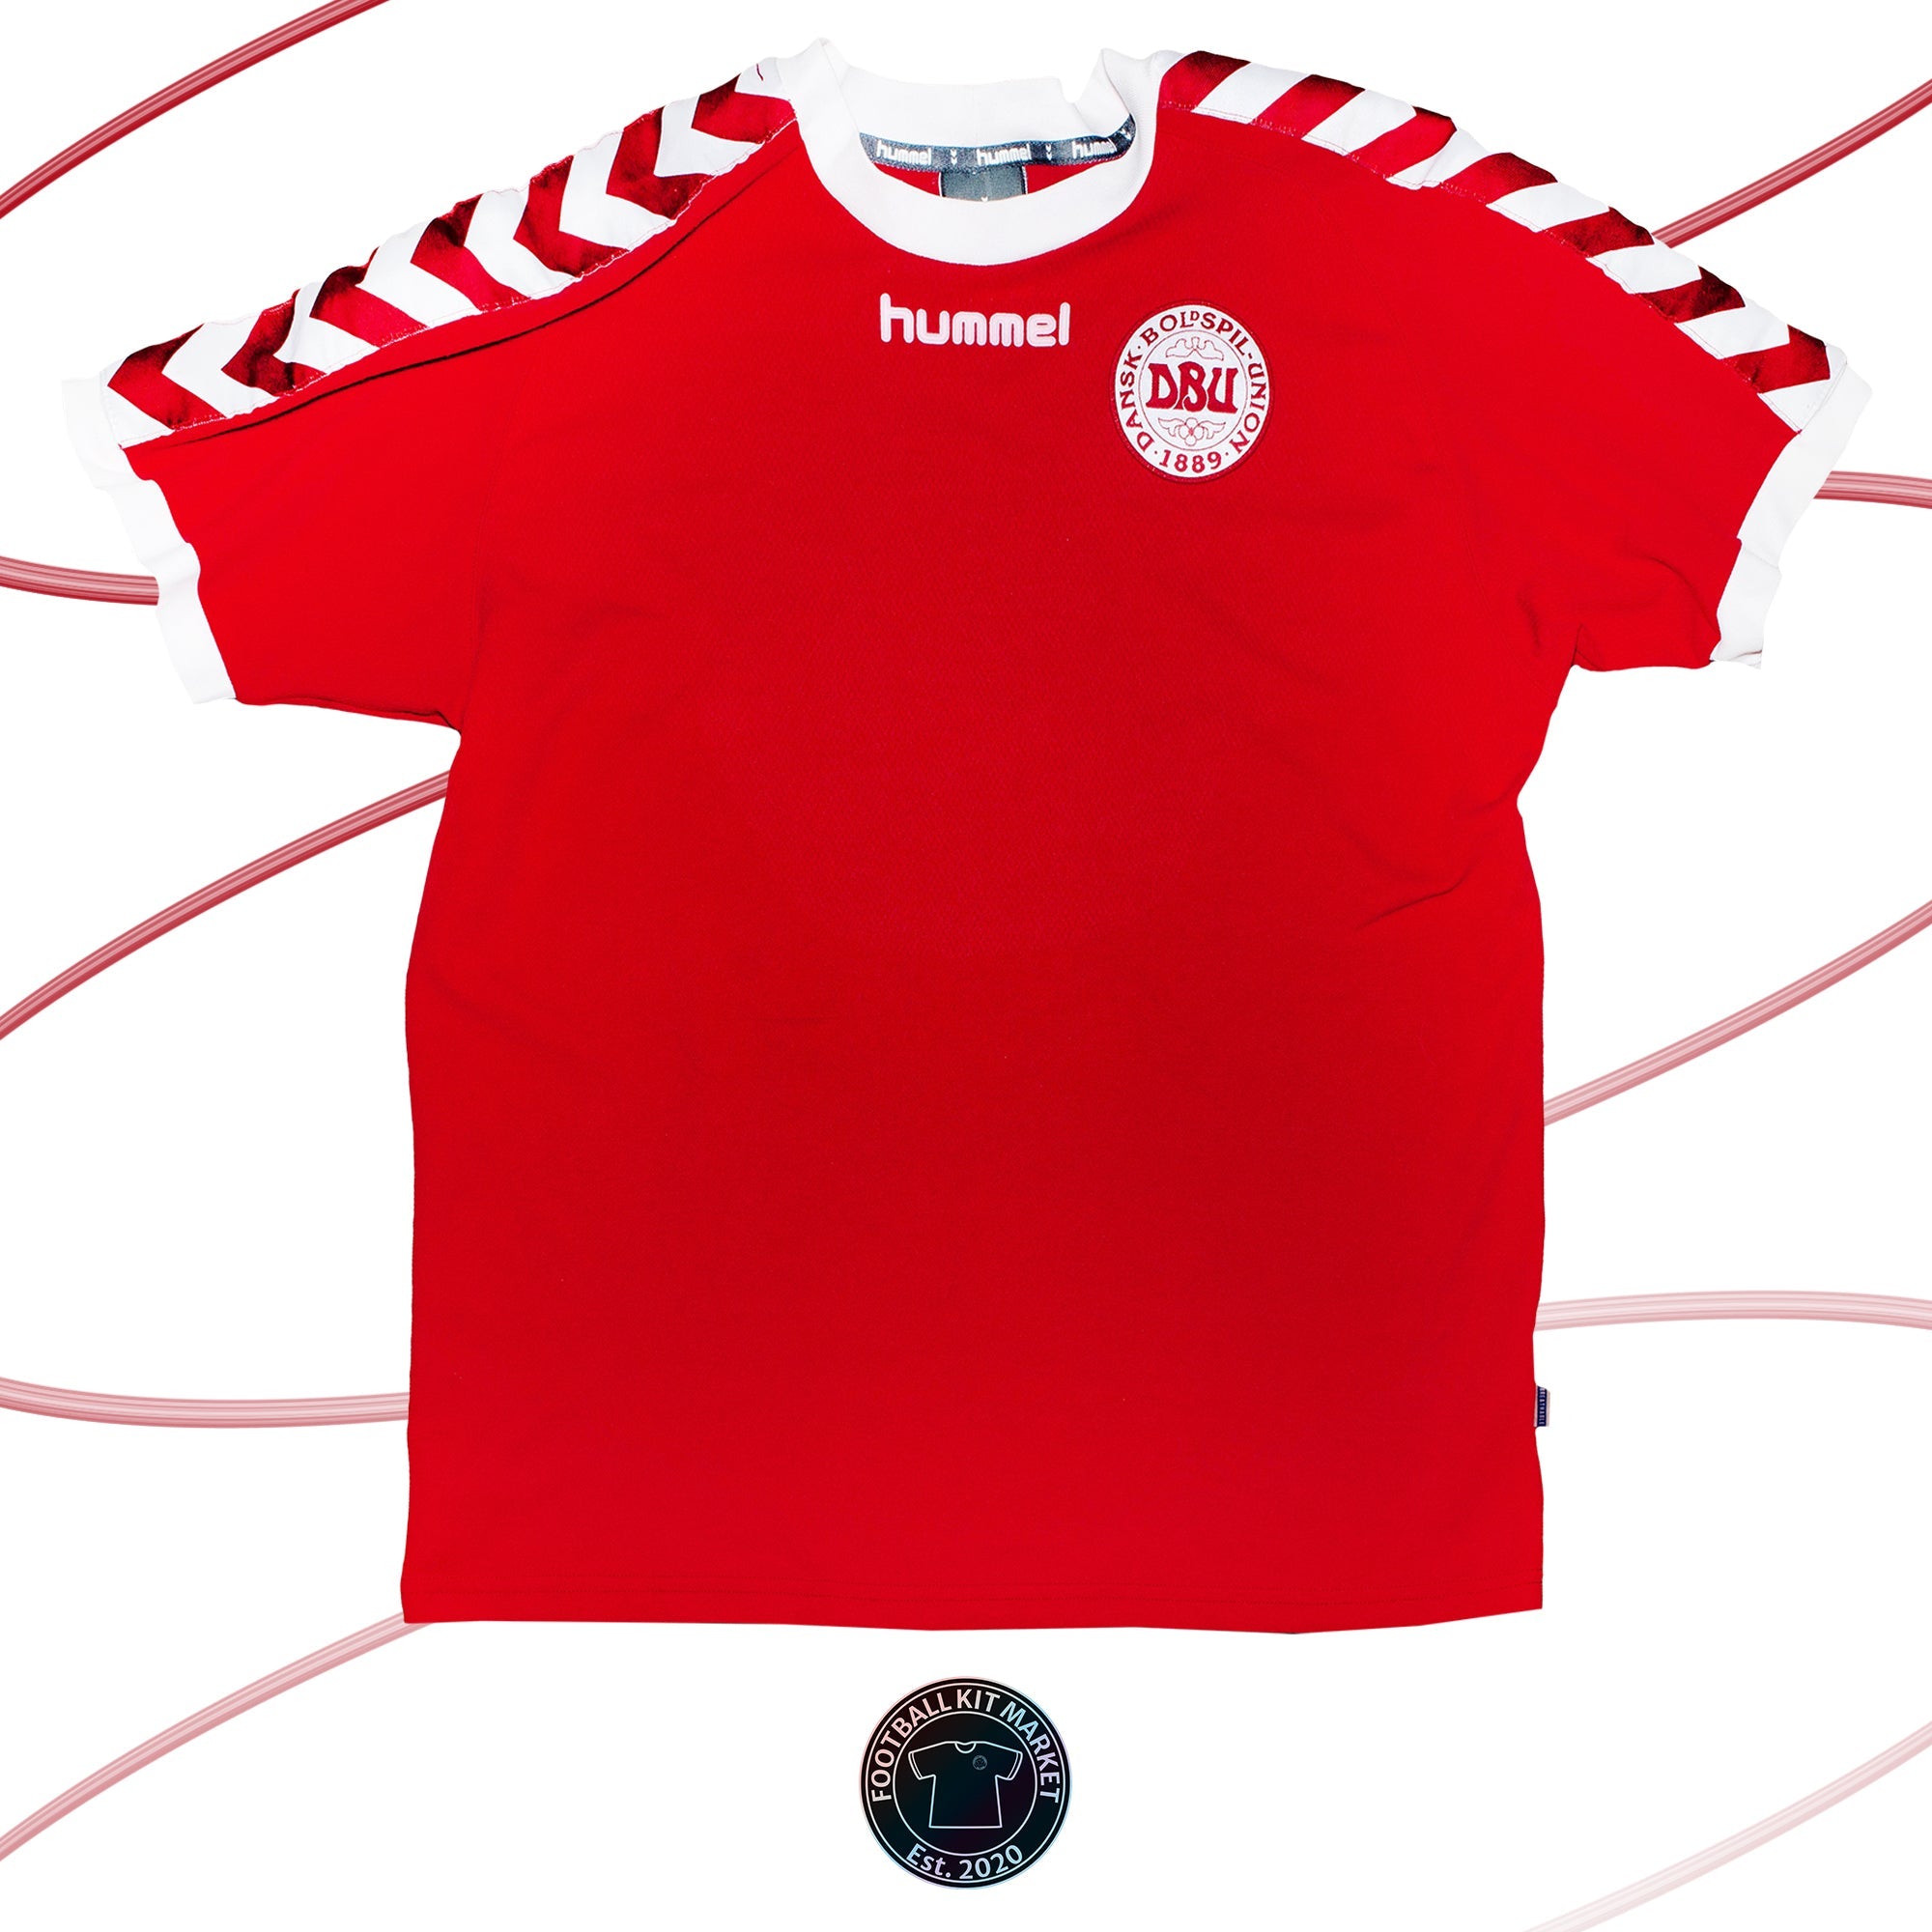 Genuine DENMARK Home Shirt (2002-2003) - HUMMEL (L) - Product Image from Football Kit Market